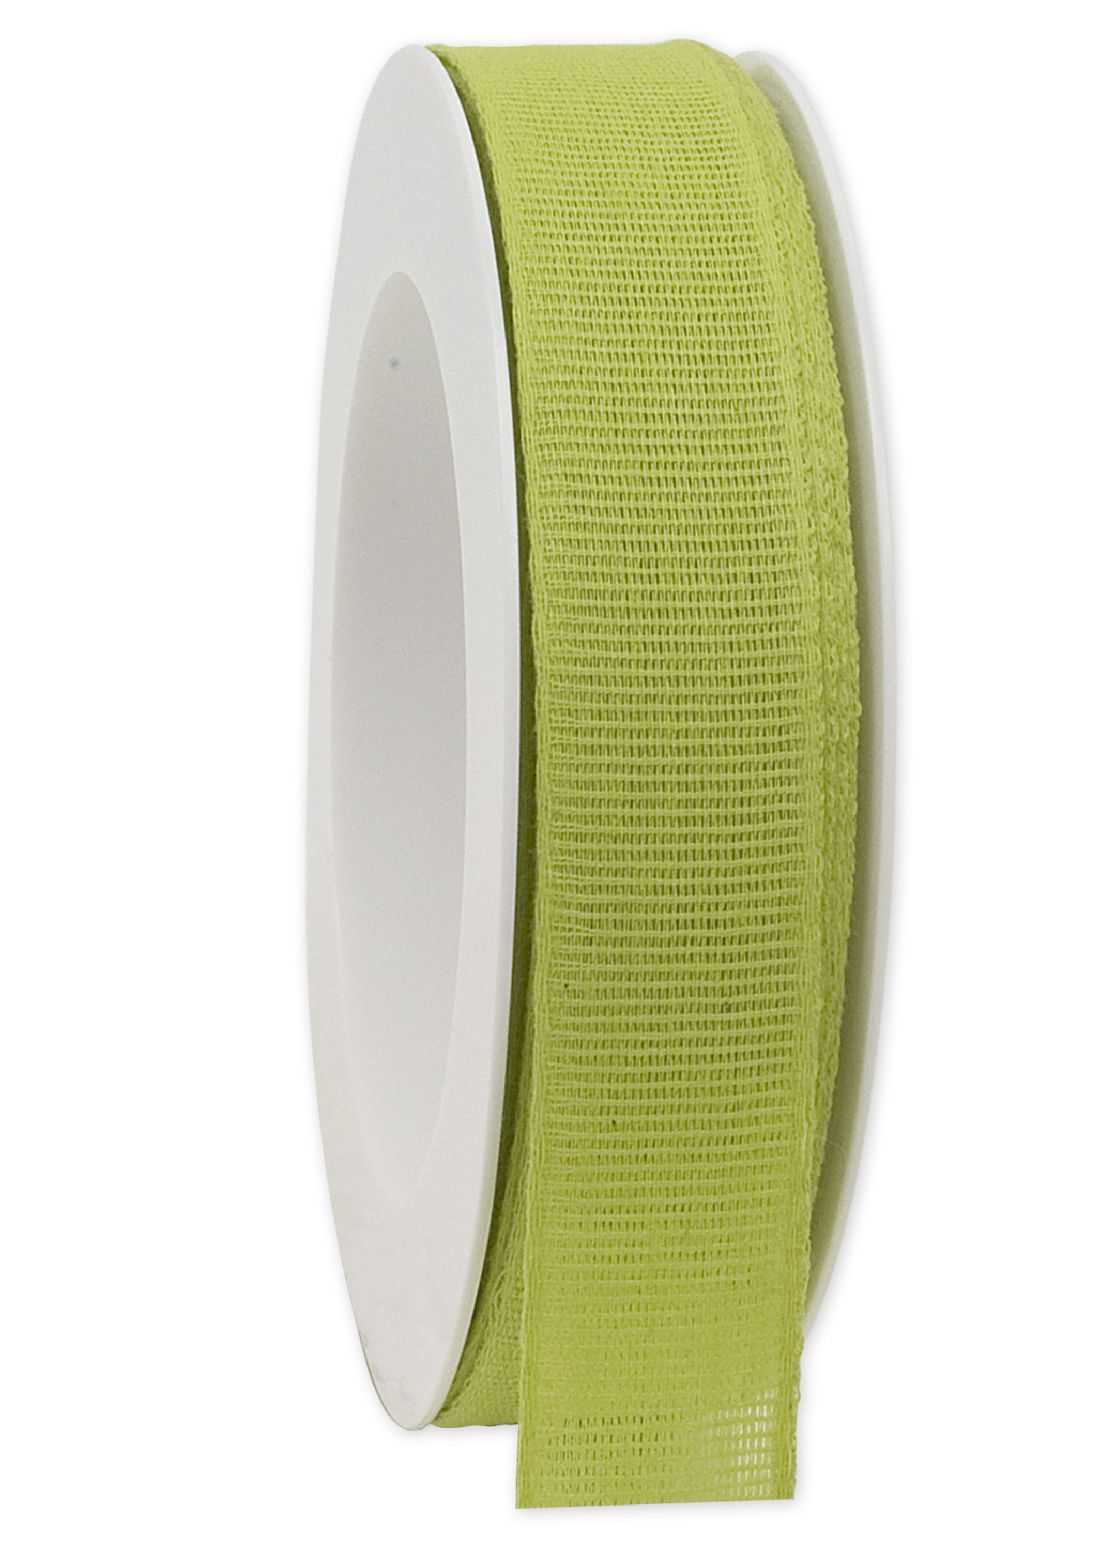 Basicband NATURE grün 53 biologisch abbaubar B:25mm L:20m Baumwollband 267